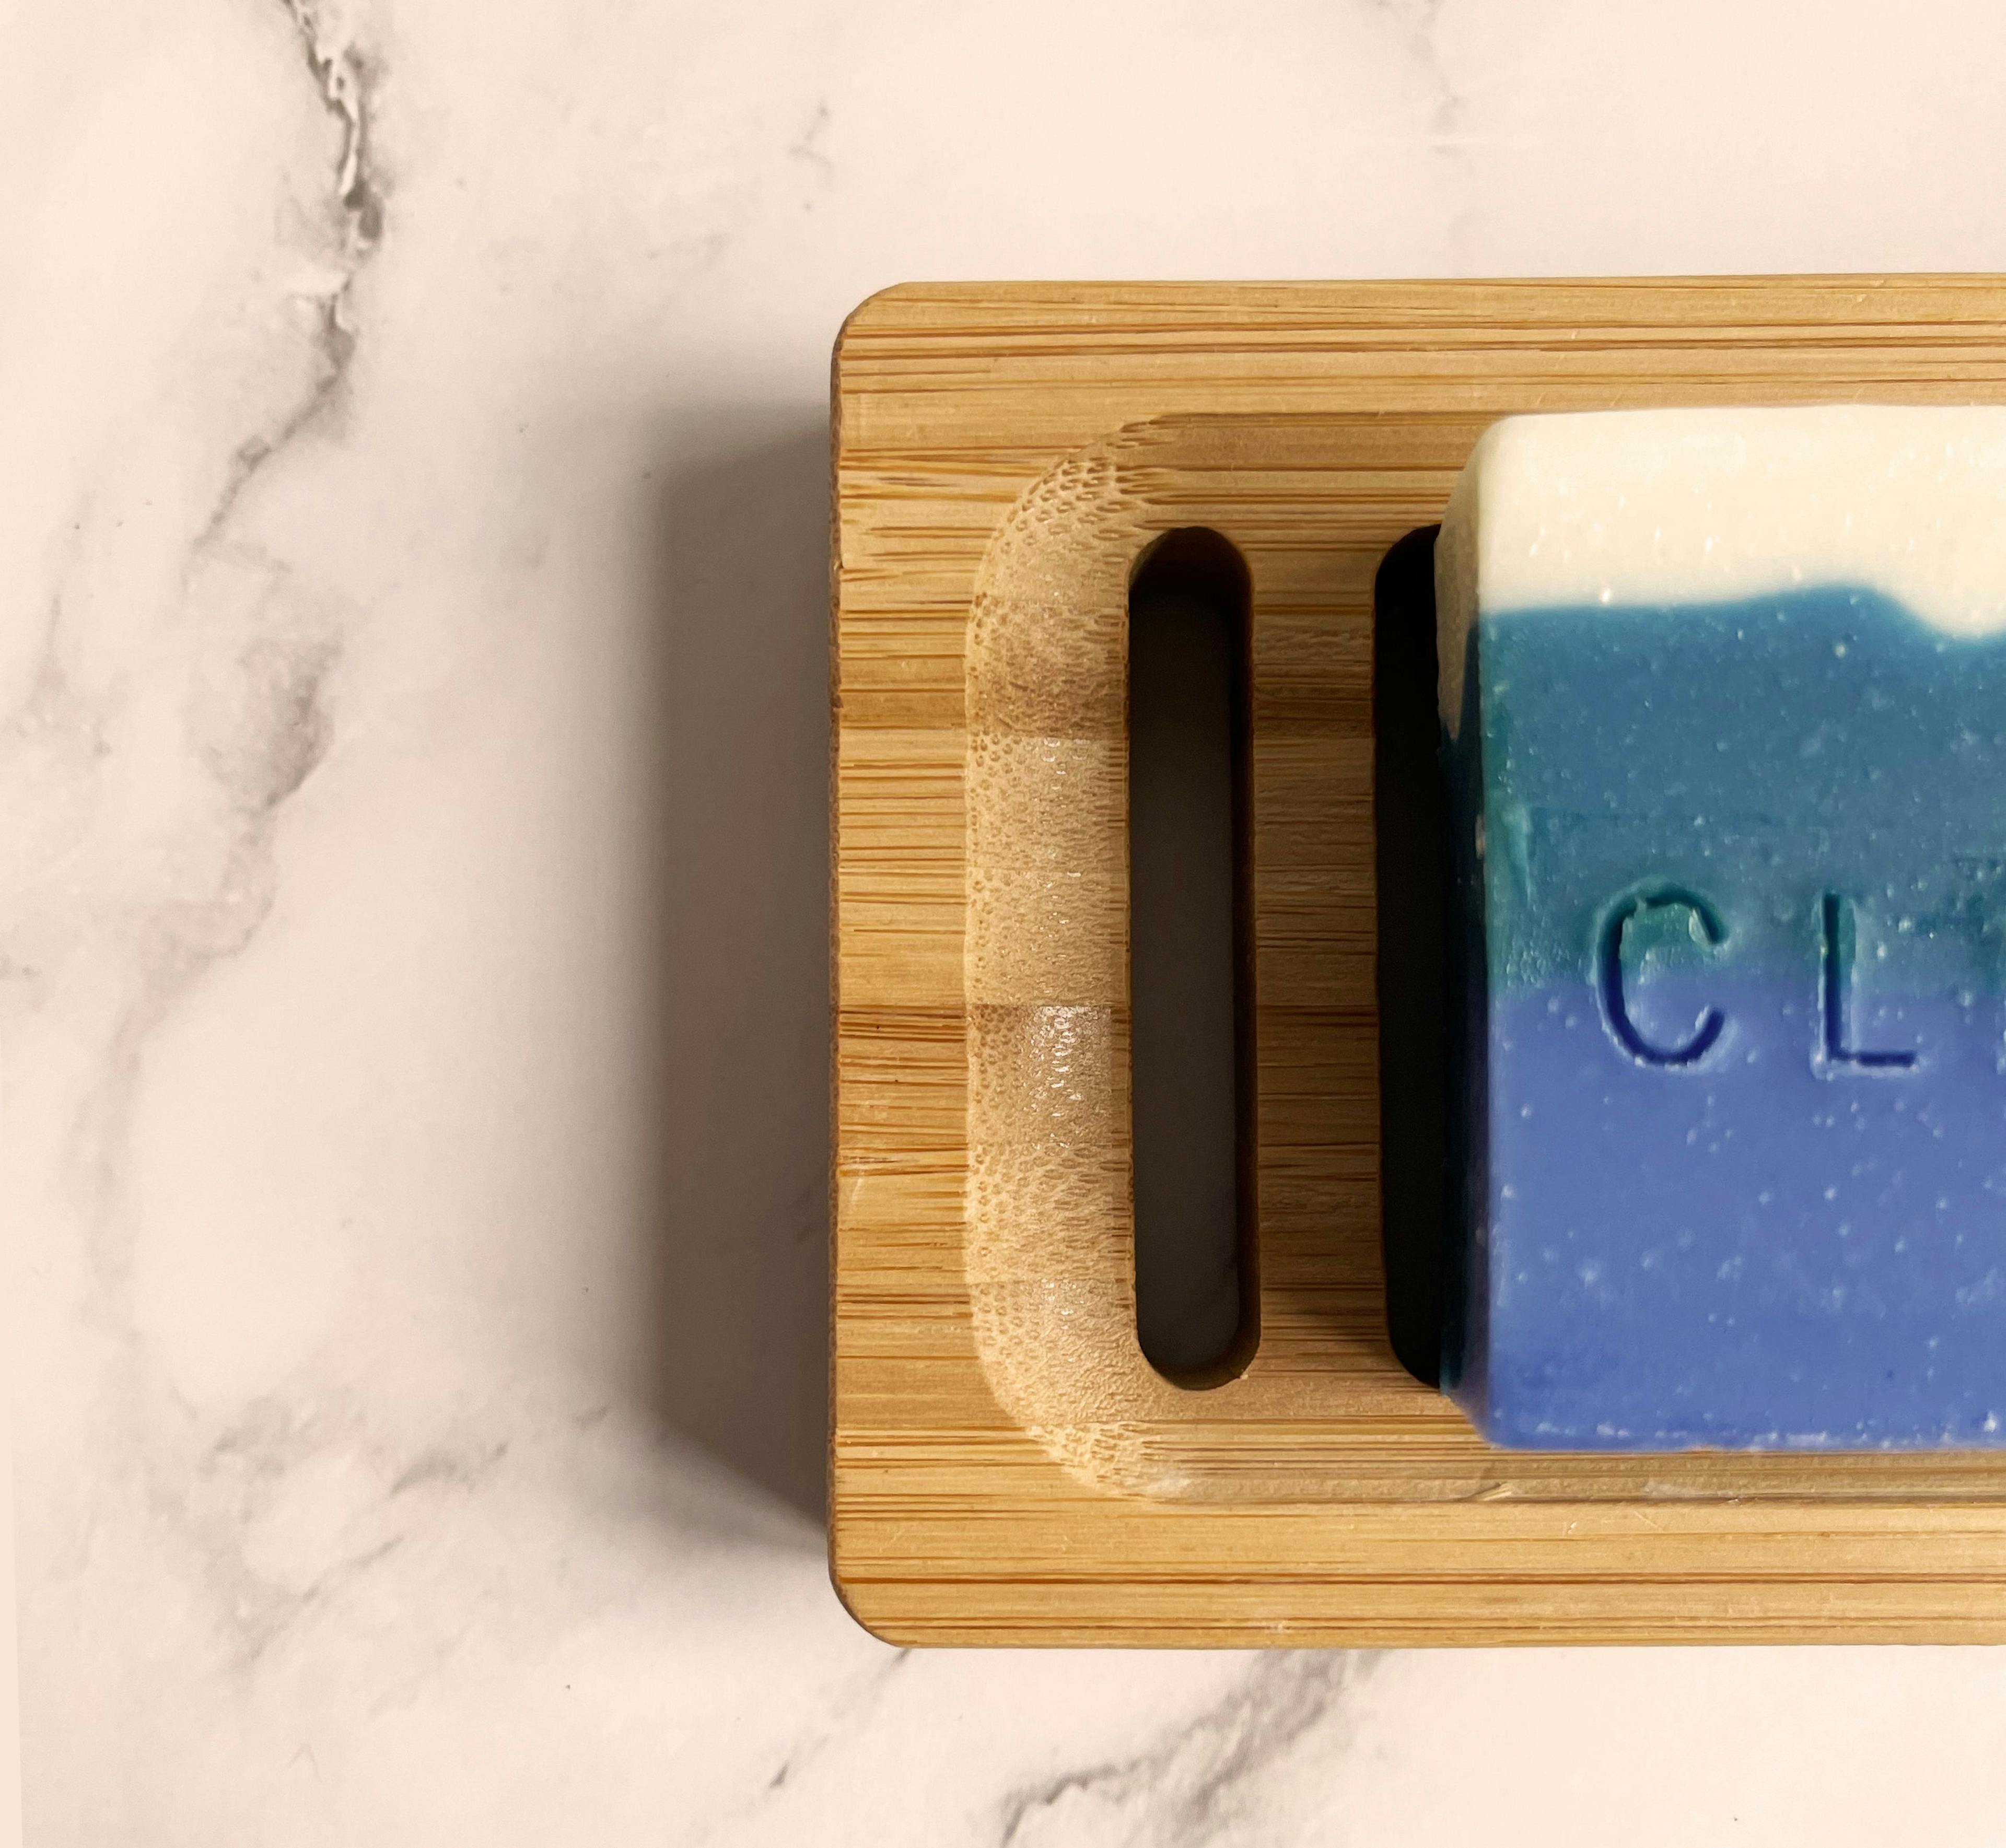 Natural Artisan Soap Gift Box | Set of 3 | Choice of Scents